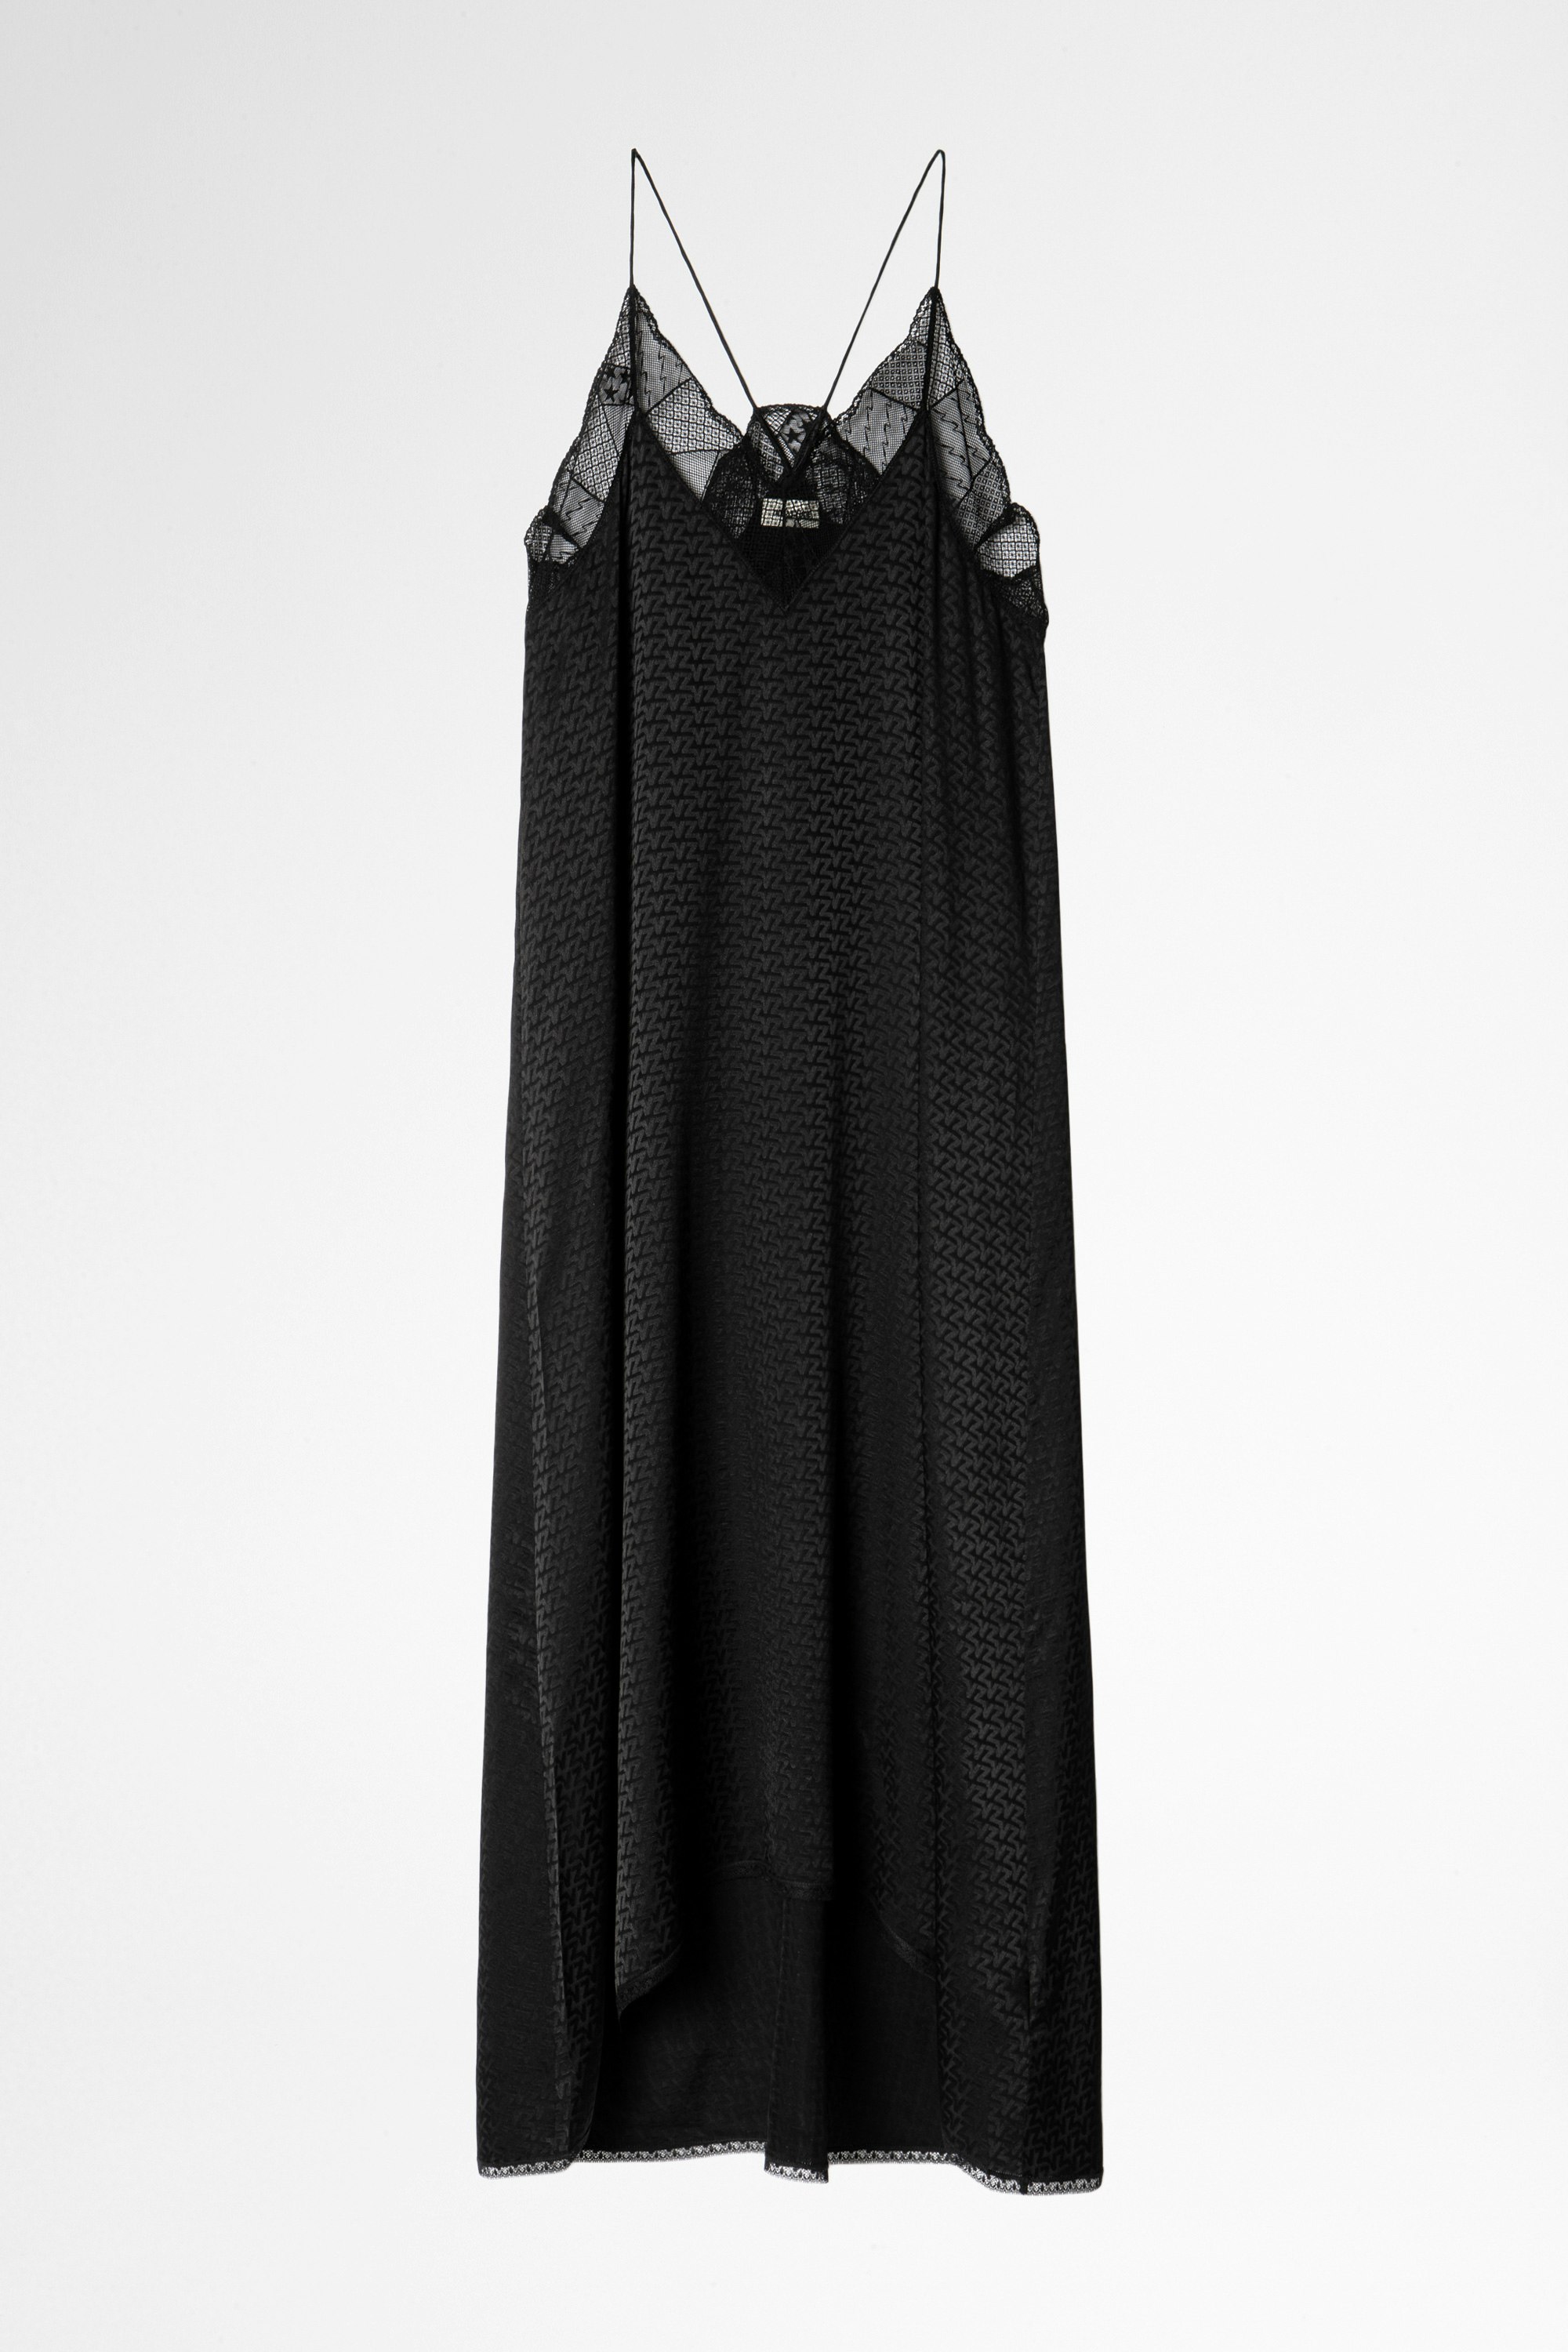 Risty Jac ZV Silk Dress Women’s black silk jacquard dress.